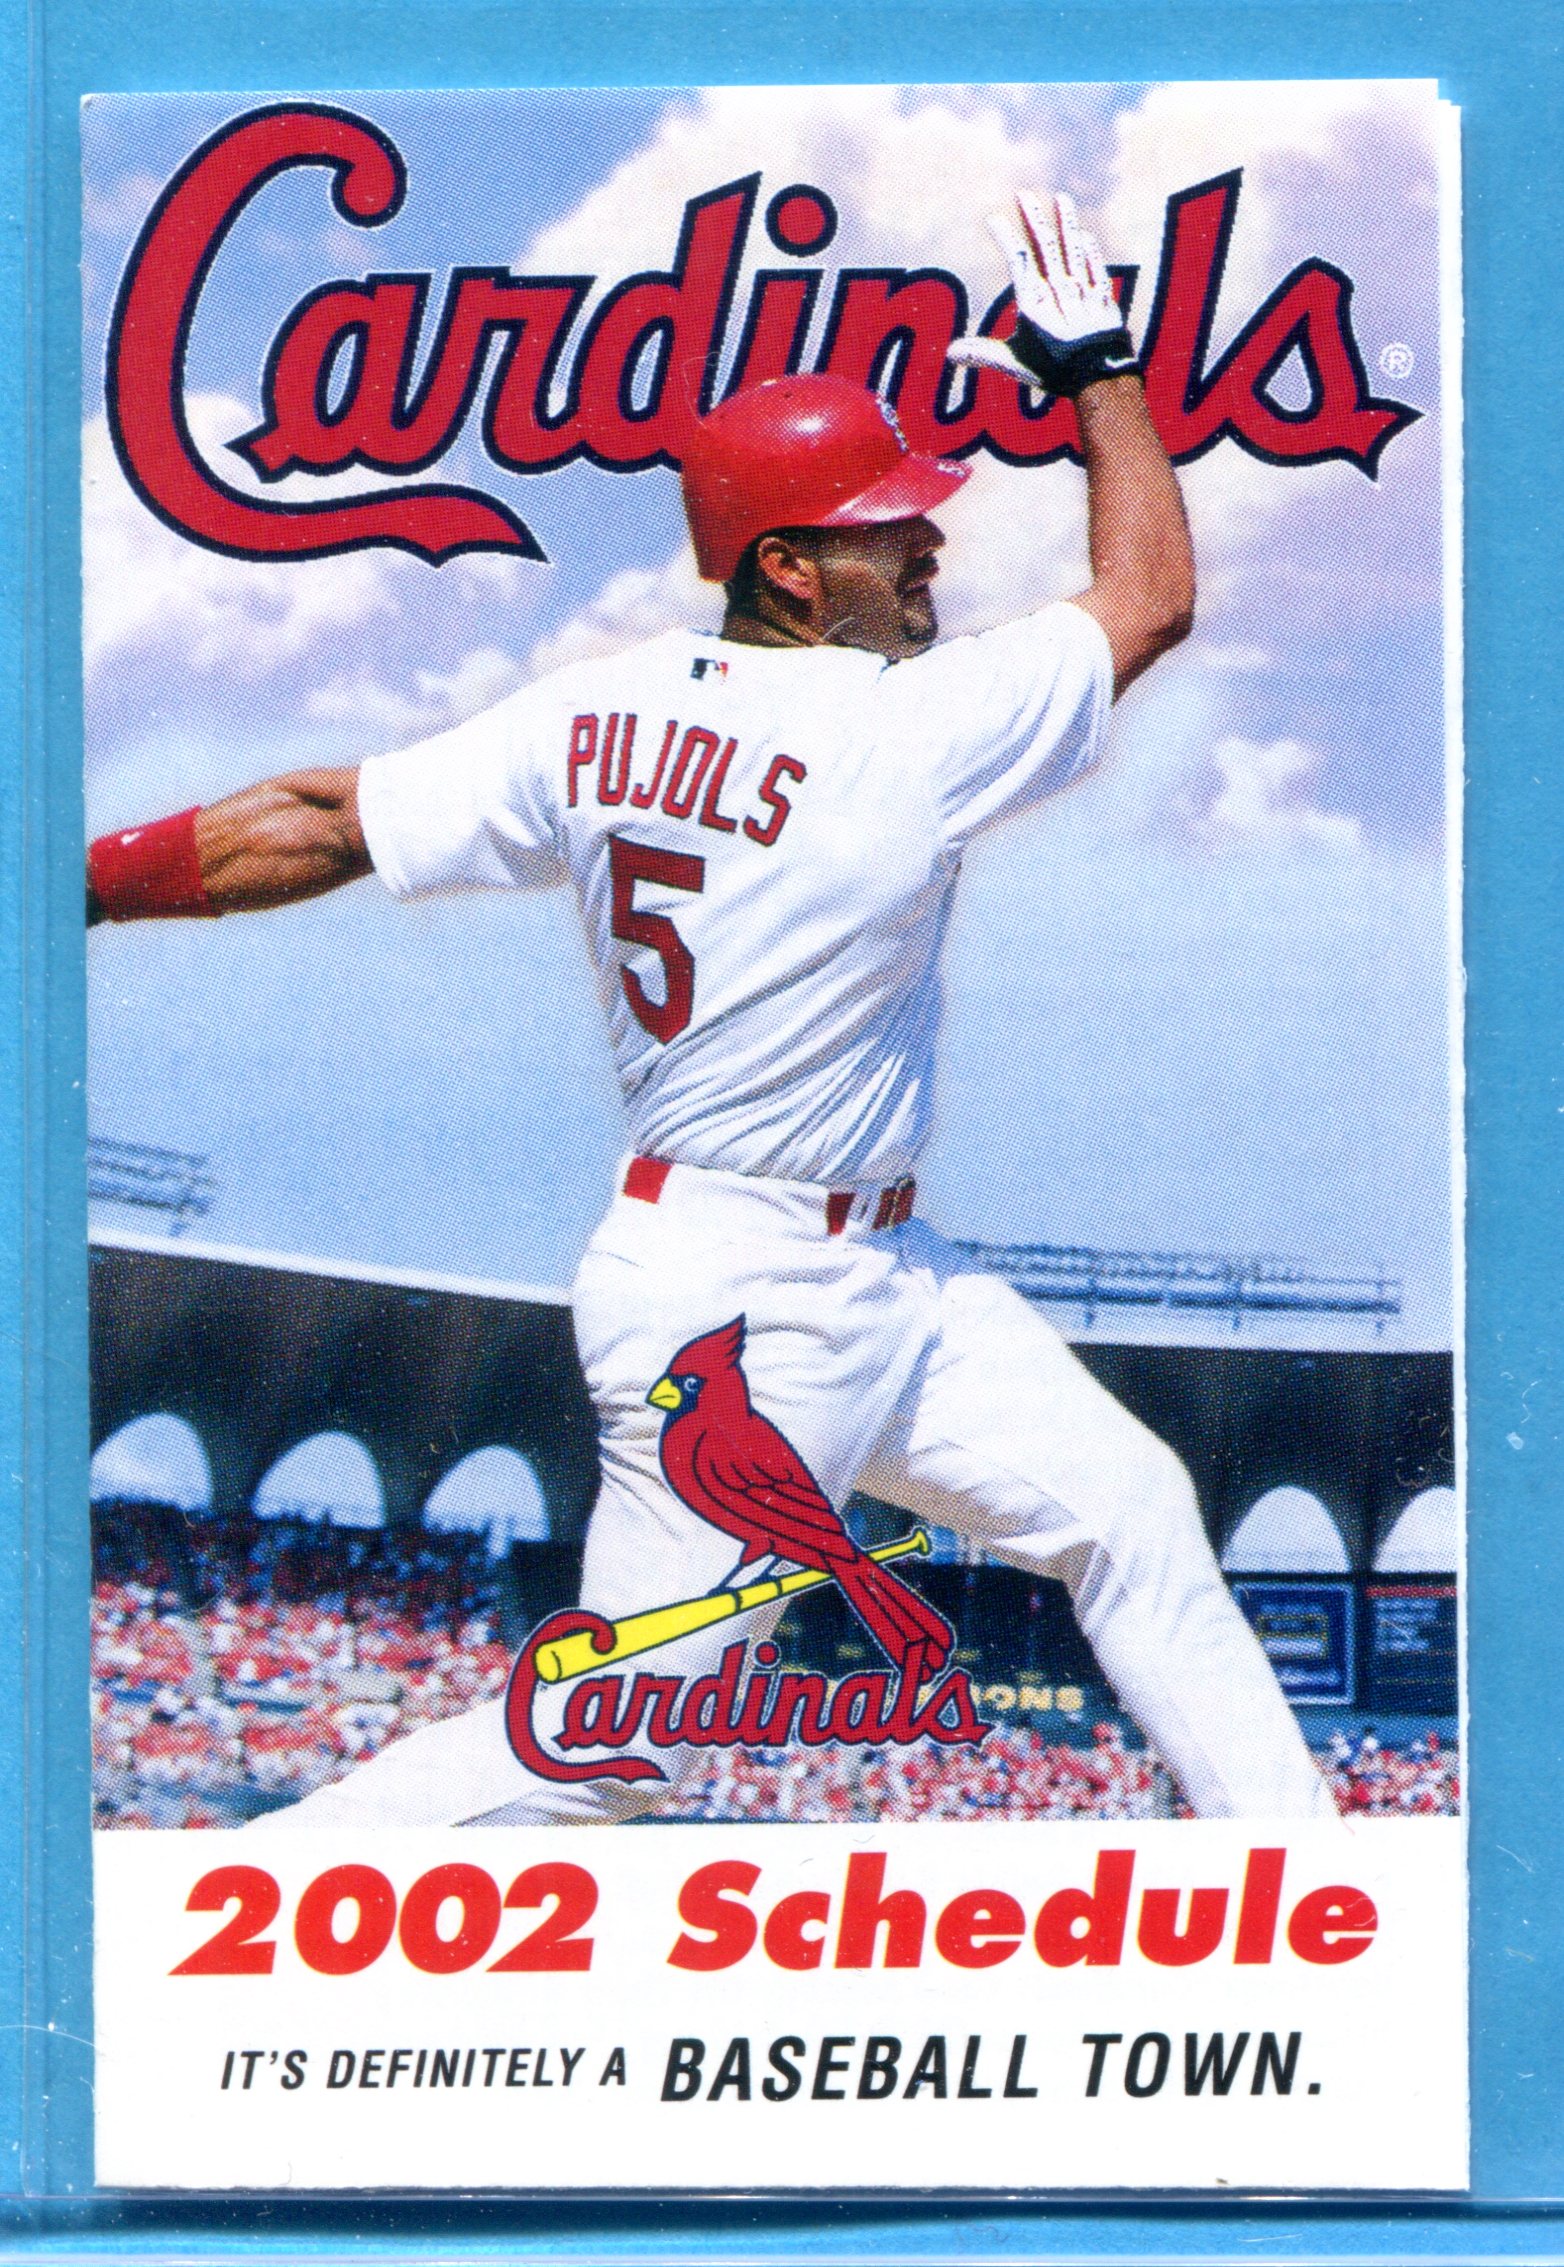 2002 St. Louis Cardinals Pocket Schedule ~ Albert Pujols 2001 Rookie Photo on Cover 